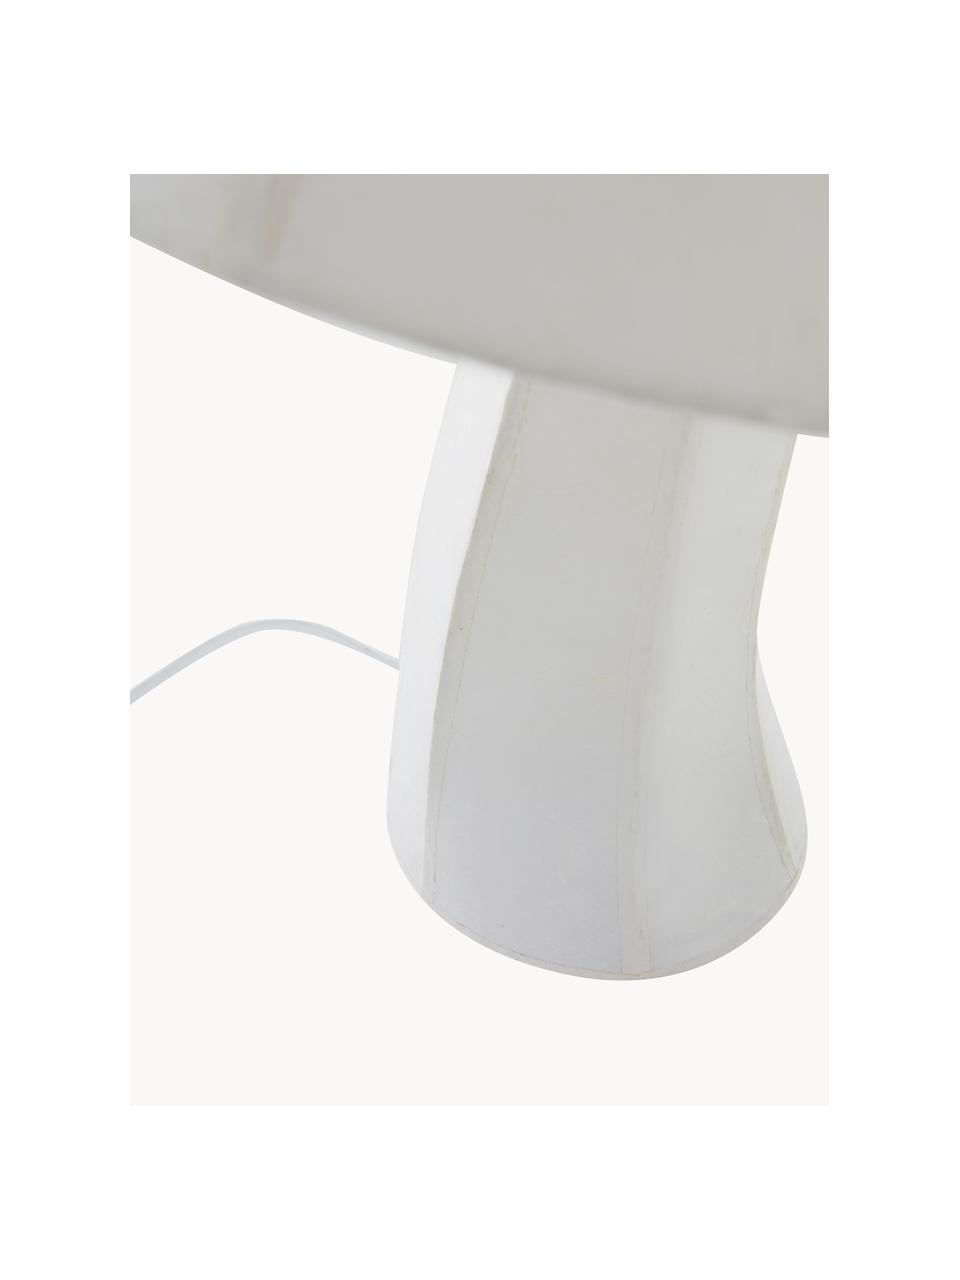 Lampe à poser Moshi, Blanc cassé, Ø 38 x haut. 50 cm